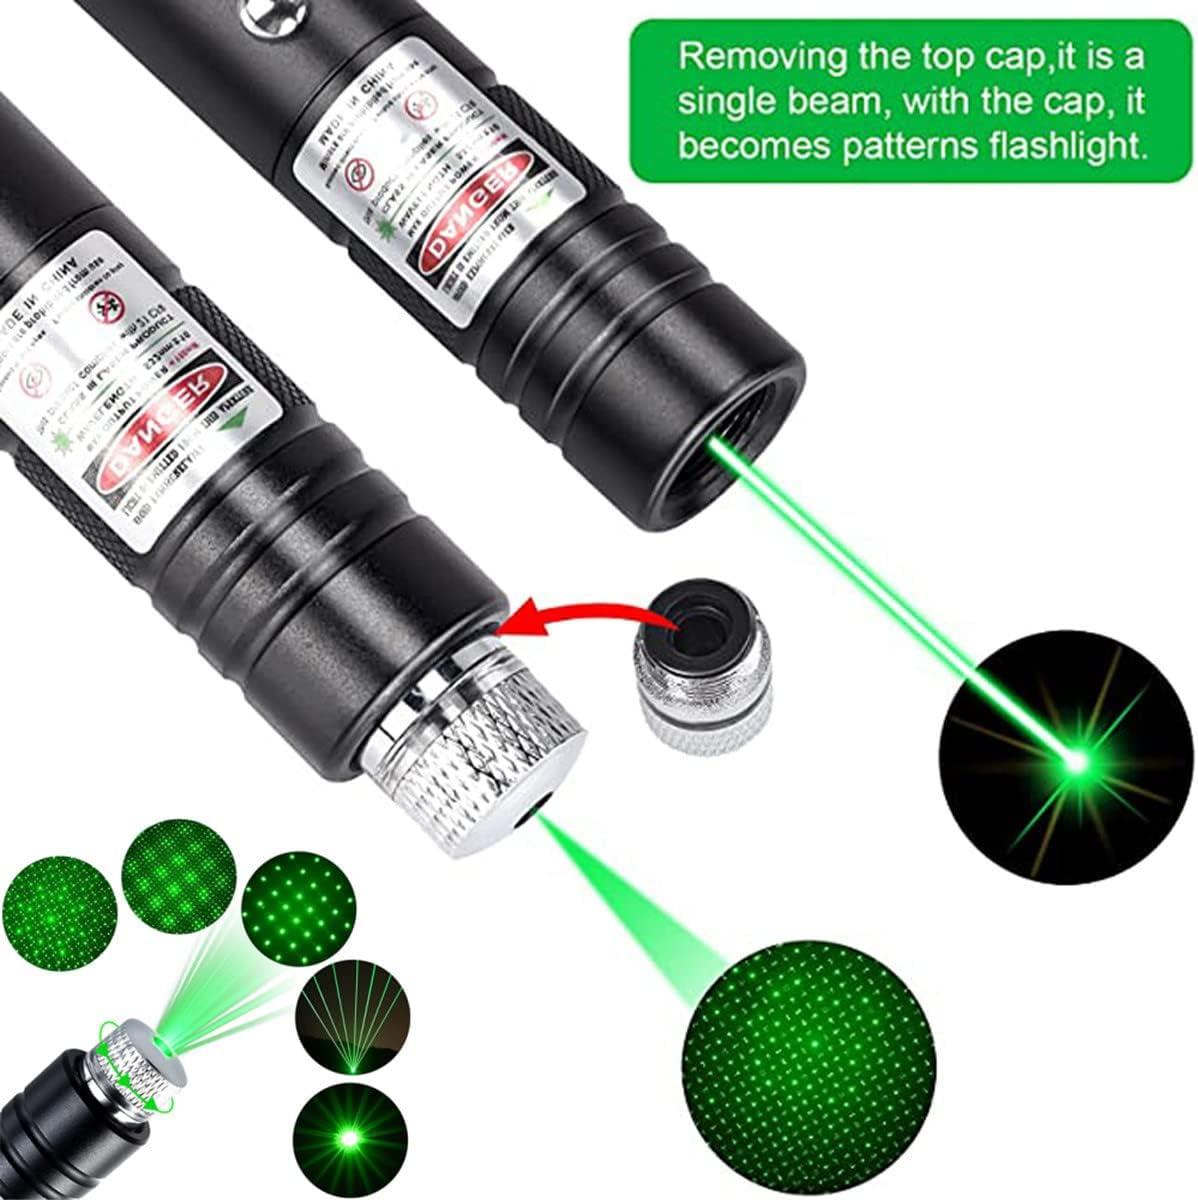 Green Laser Pointer High Power, Long Range Strong Green Laser Light Pointer  USB Rechargeable Lazer Pen for Presentations Teaching Astronomy Hunting